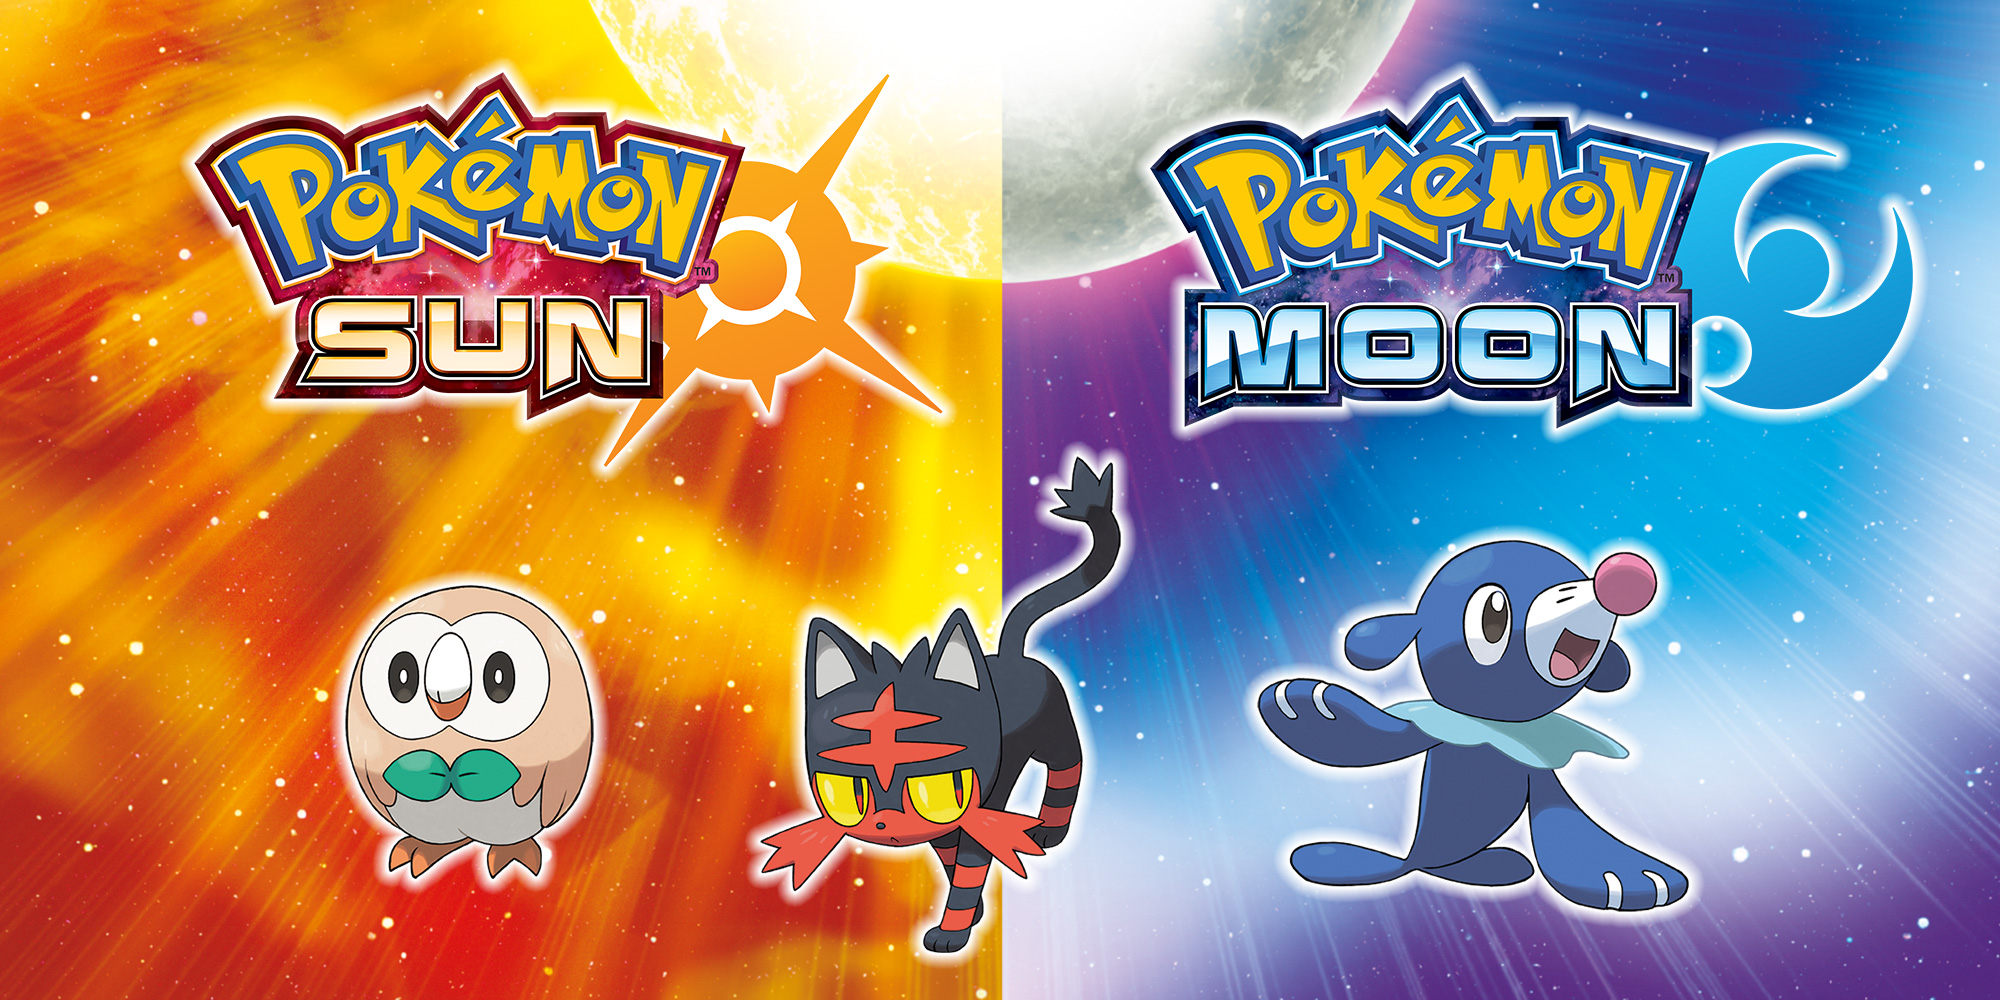 Welcome To The Alola Region, Pokémon Sun and Moon